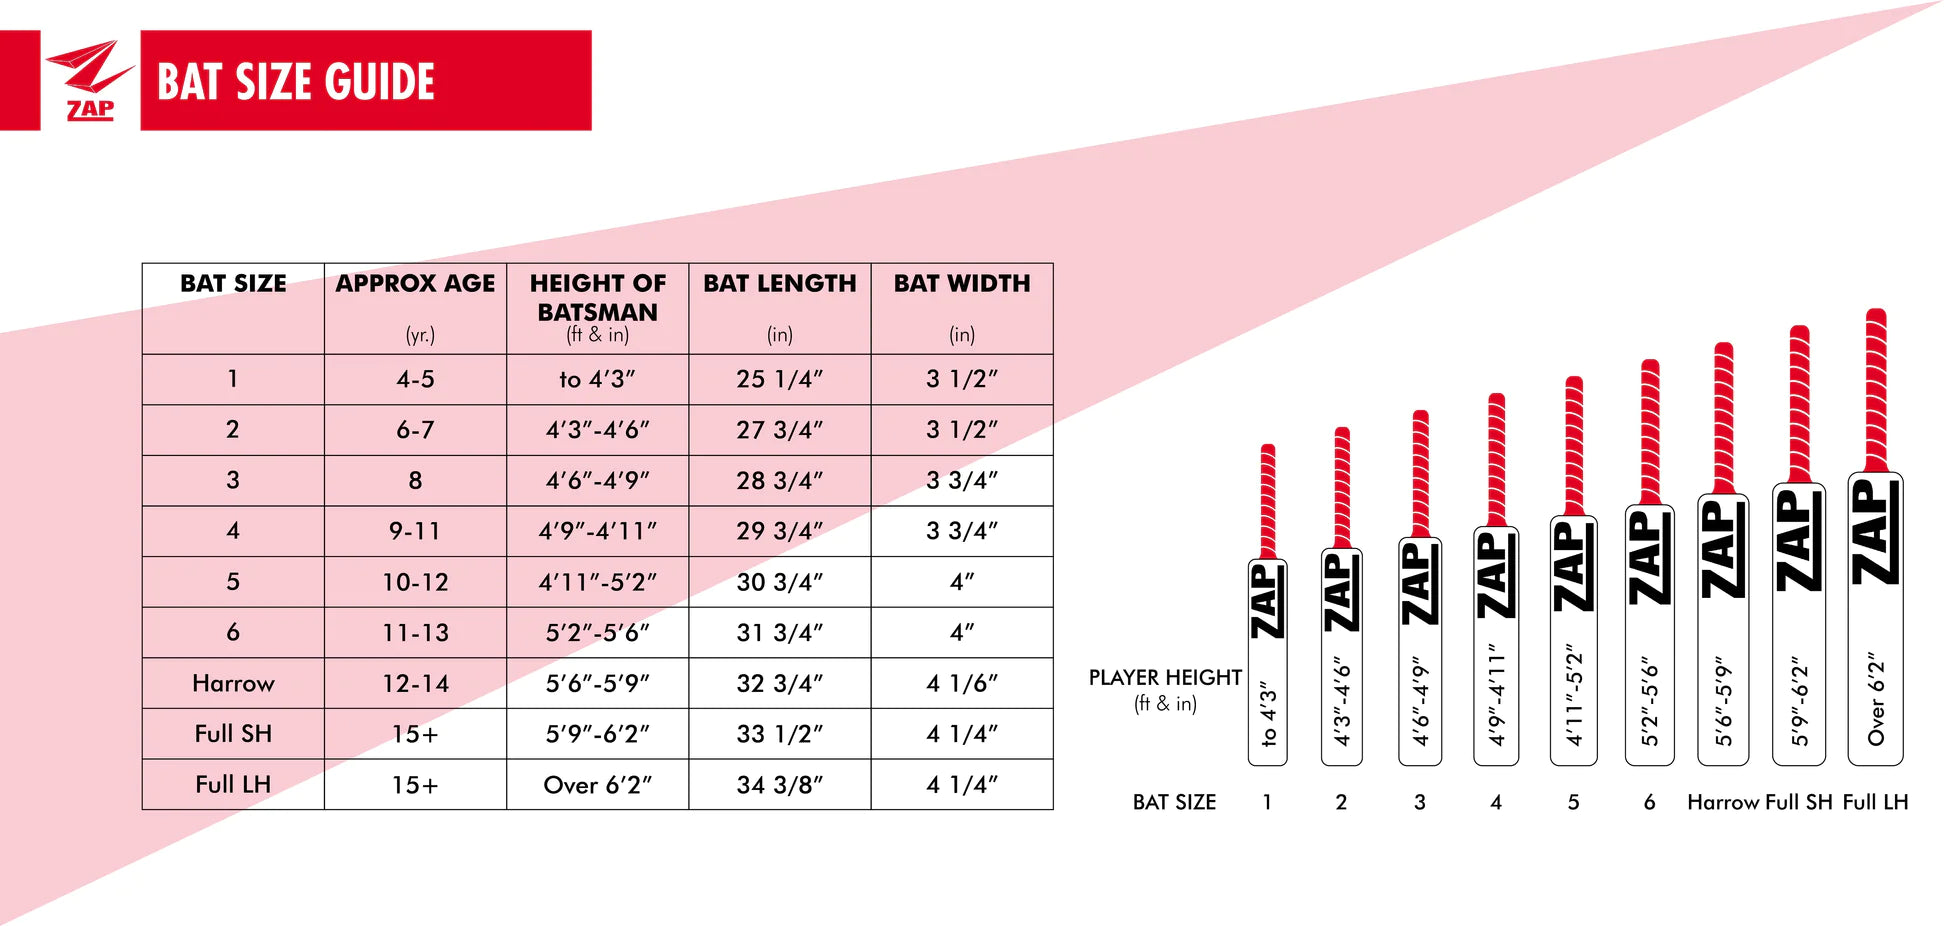 Cricket Bat size guide by ZAP